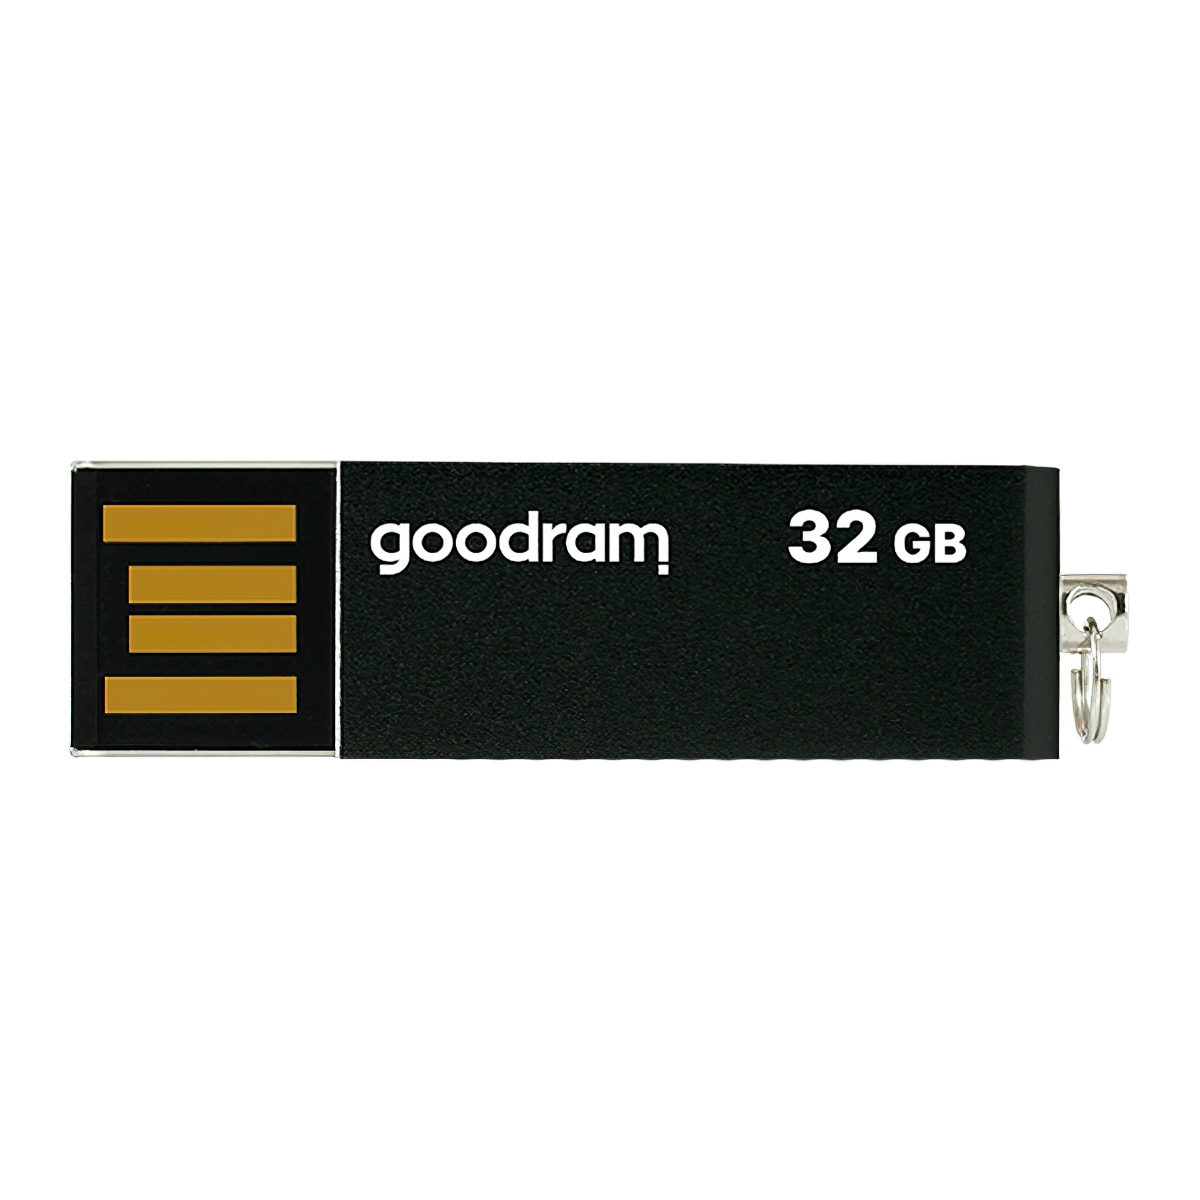 memorie-externa-goodram-ucu2-2C-32gb-2C-usb-2.0-2C-neagra-ucu2-0320k0r11-